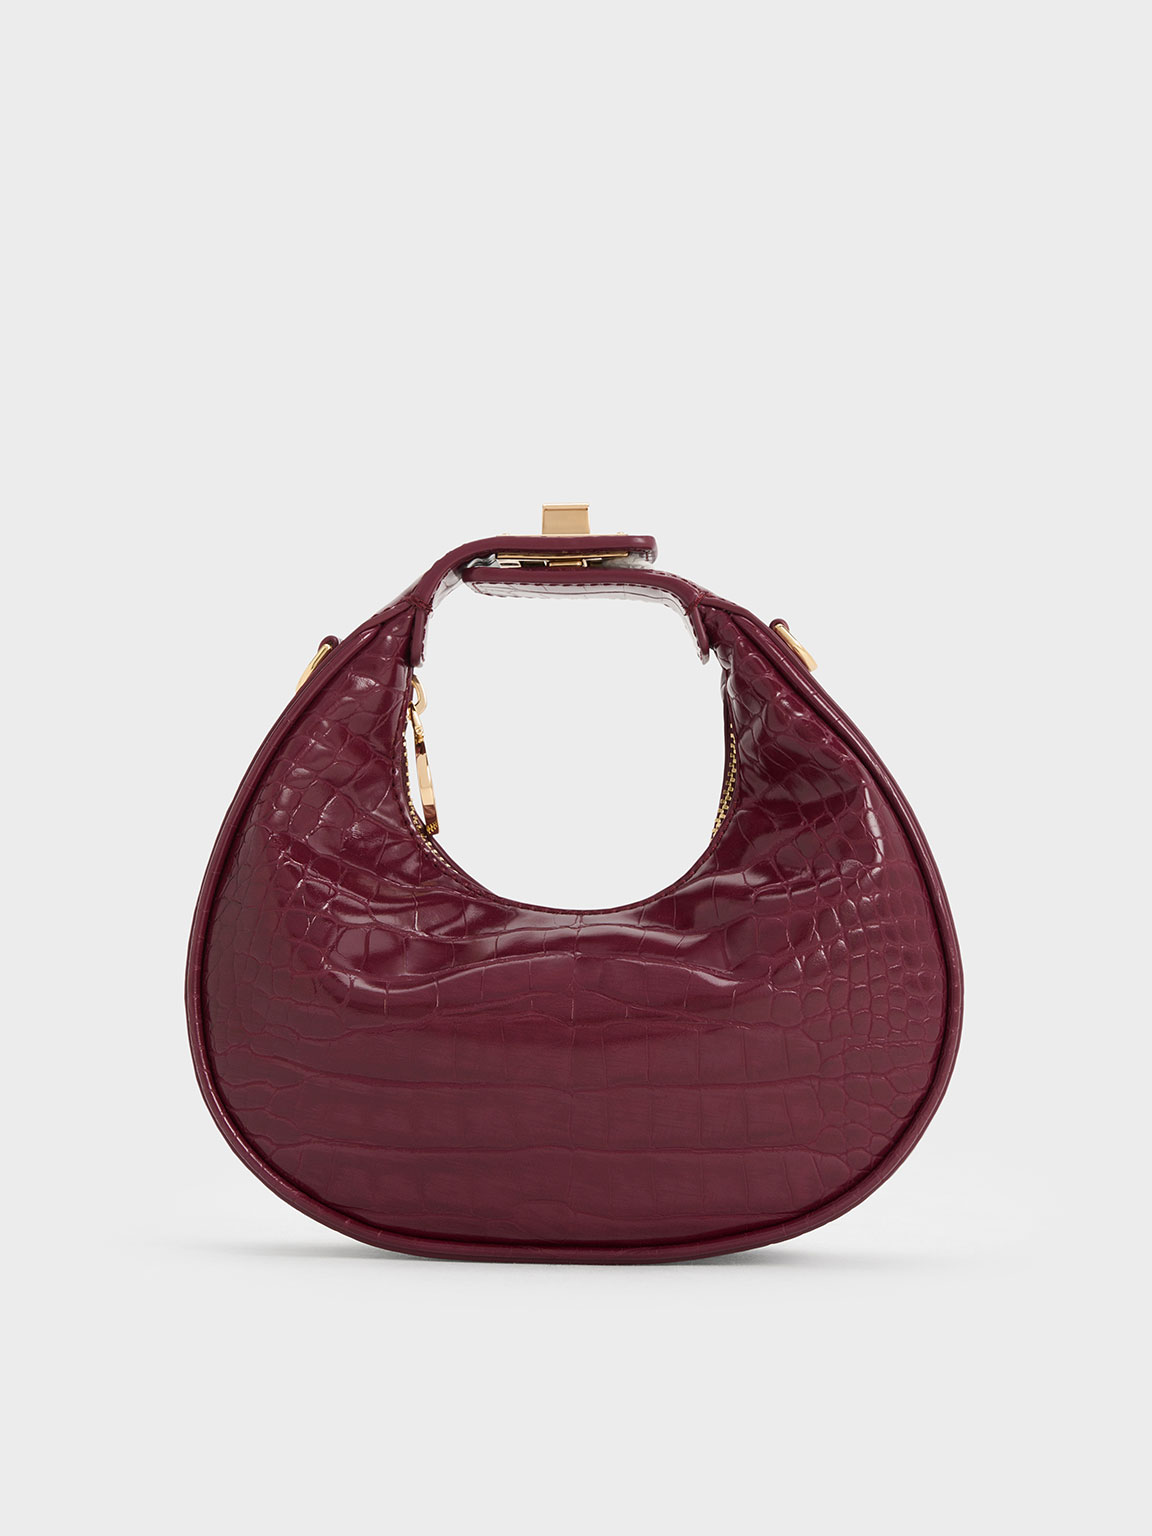 Burgundy Round Handle Patent Leather Handbags Crossbody Purses